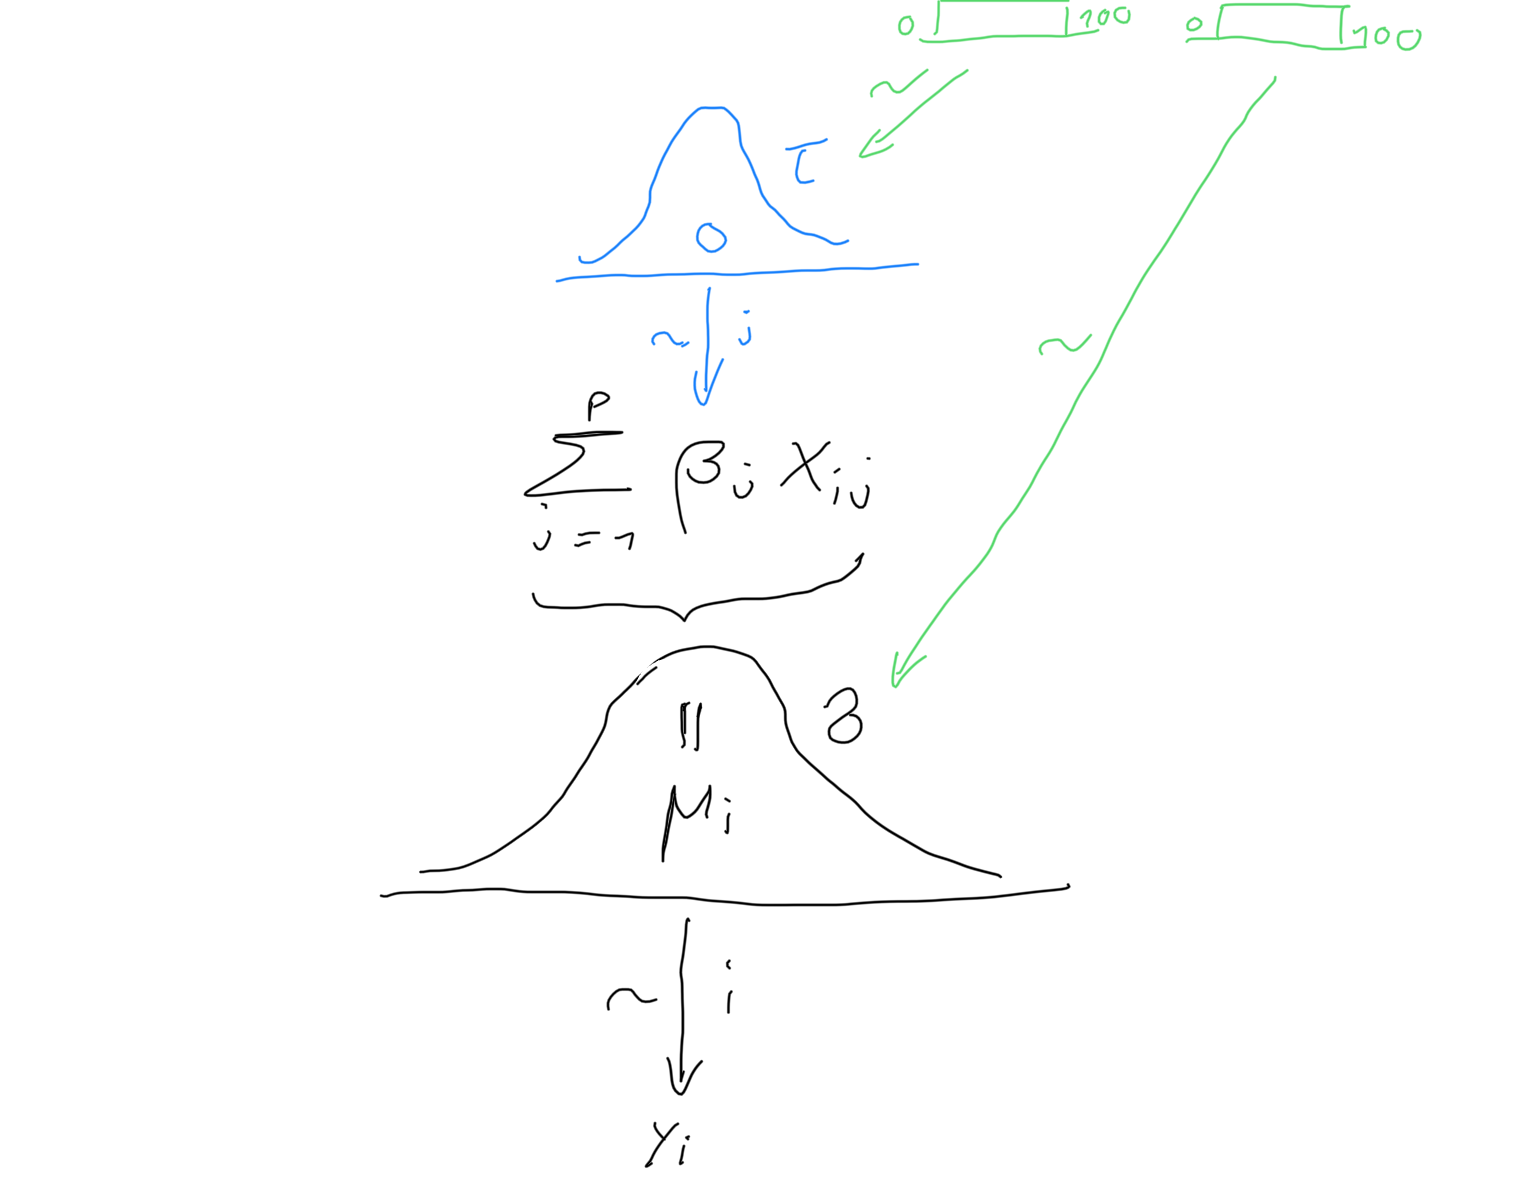 The Bayesian Ridge regression model.